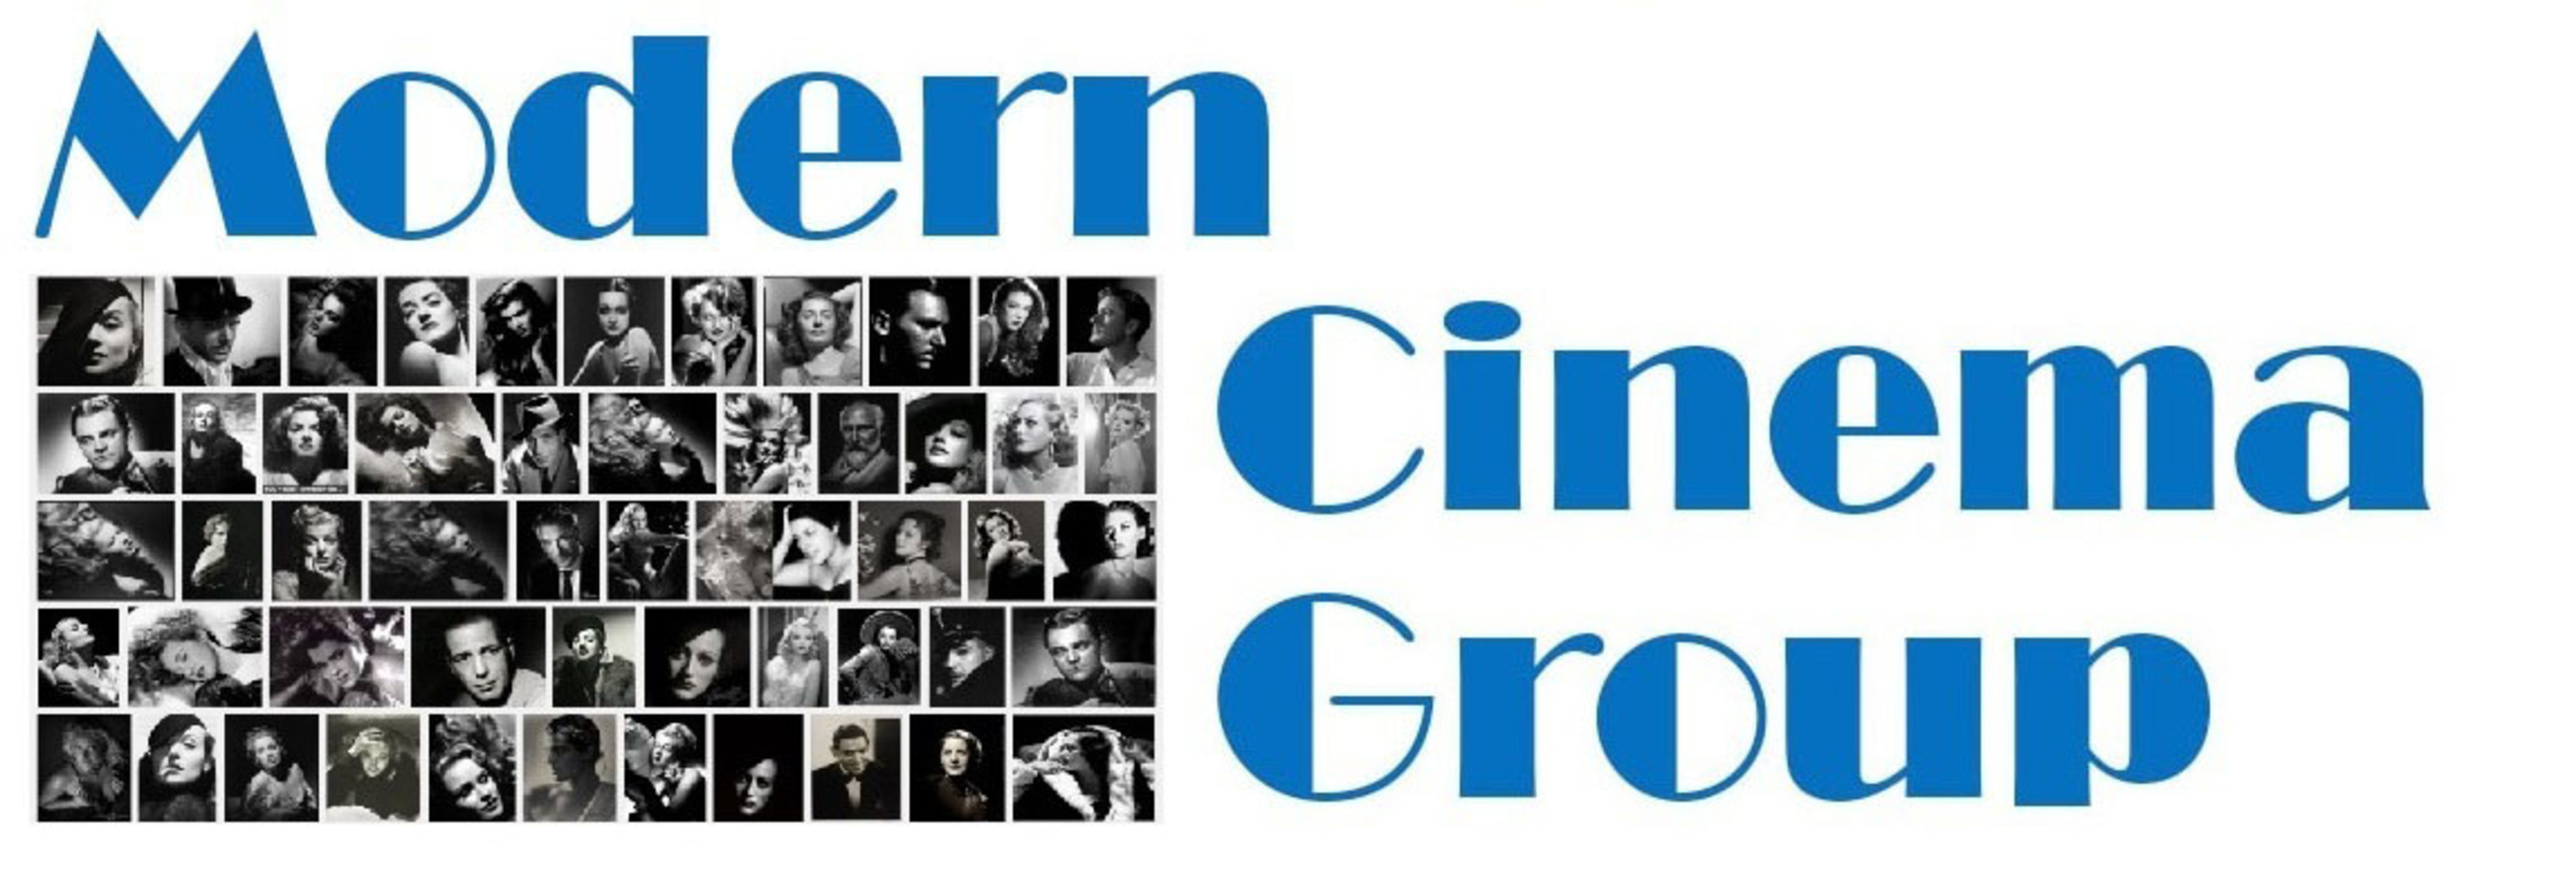 Modern Cinema Group Logo